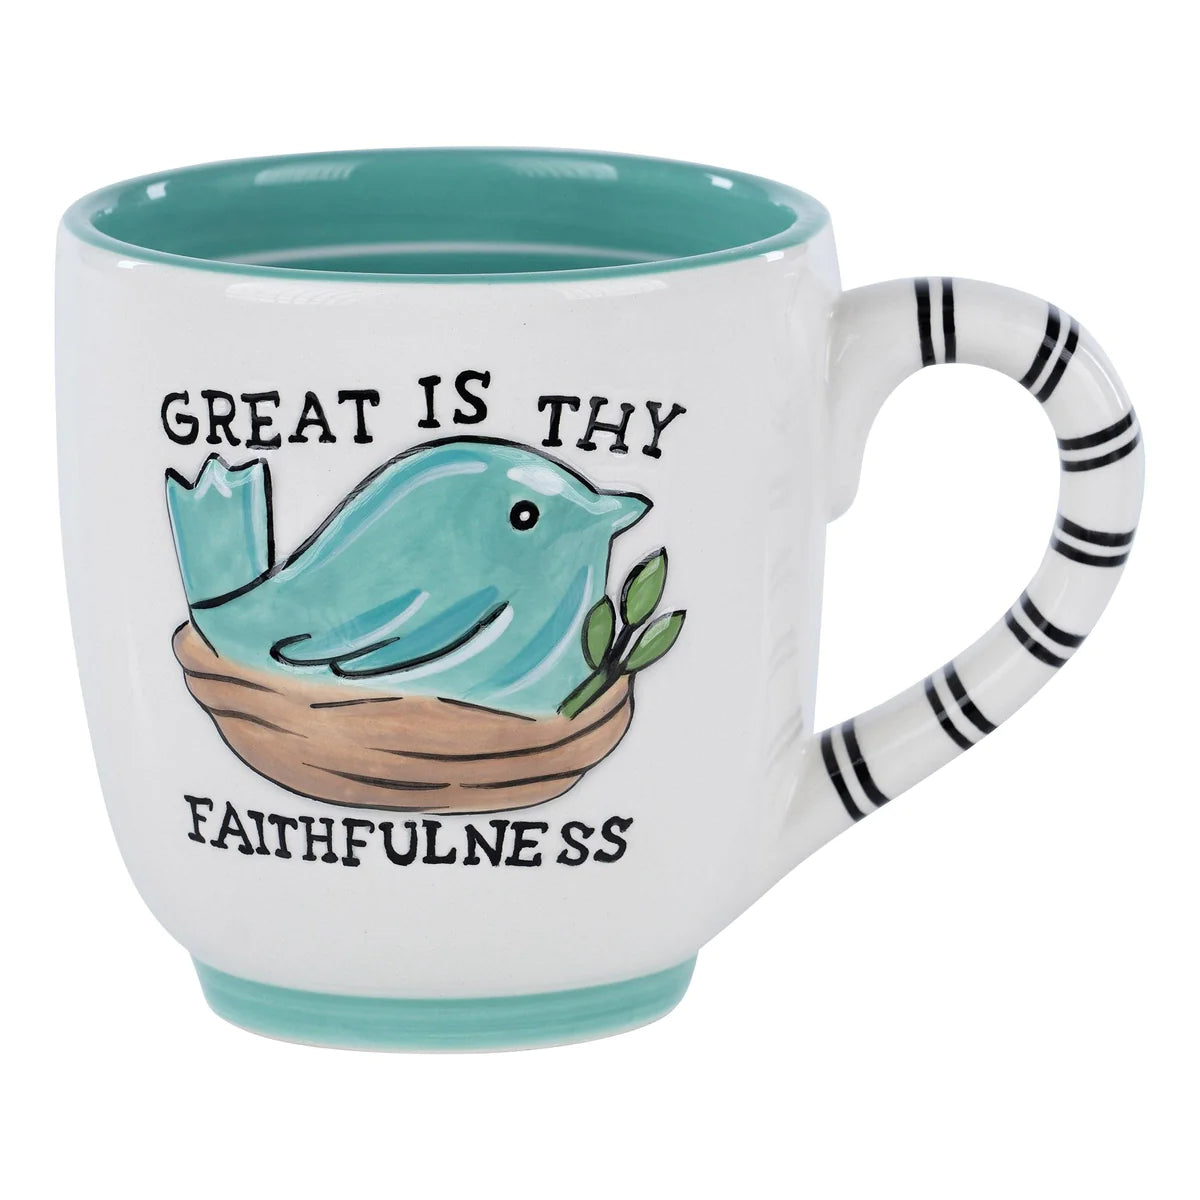 Great is thy faithfulness mug